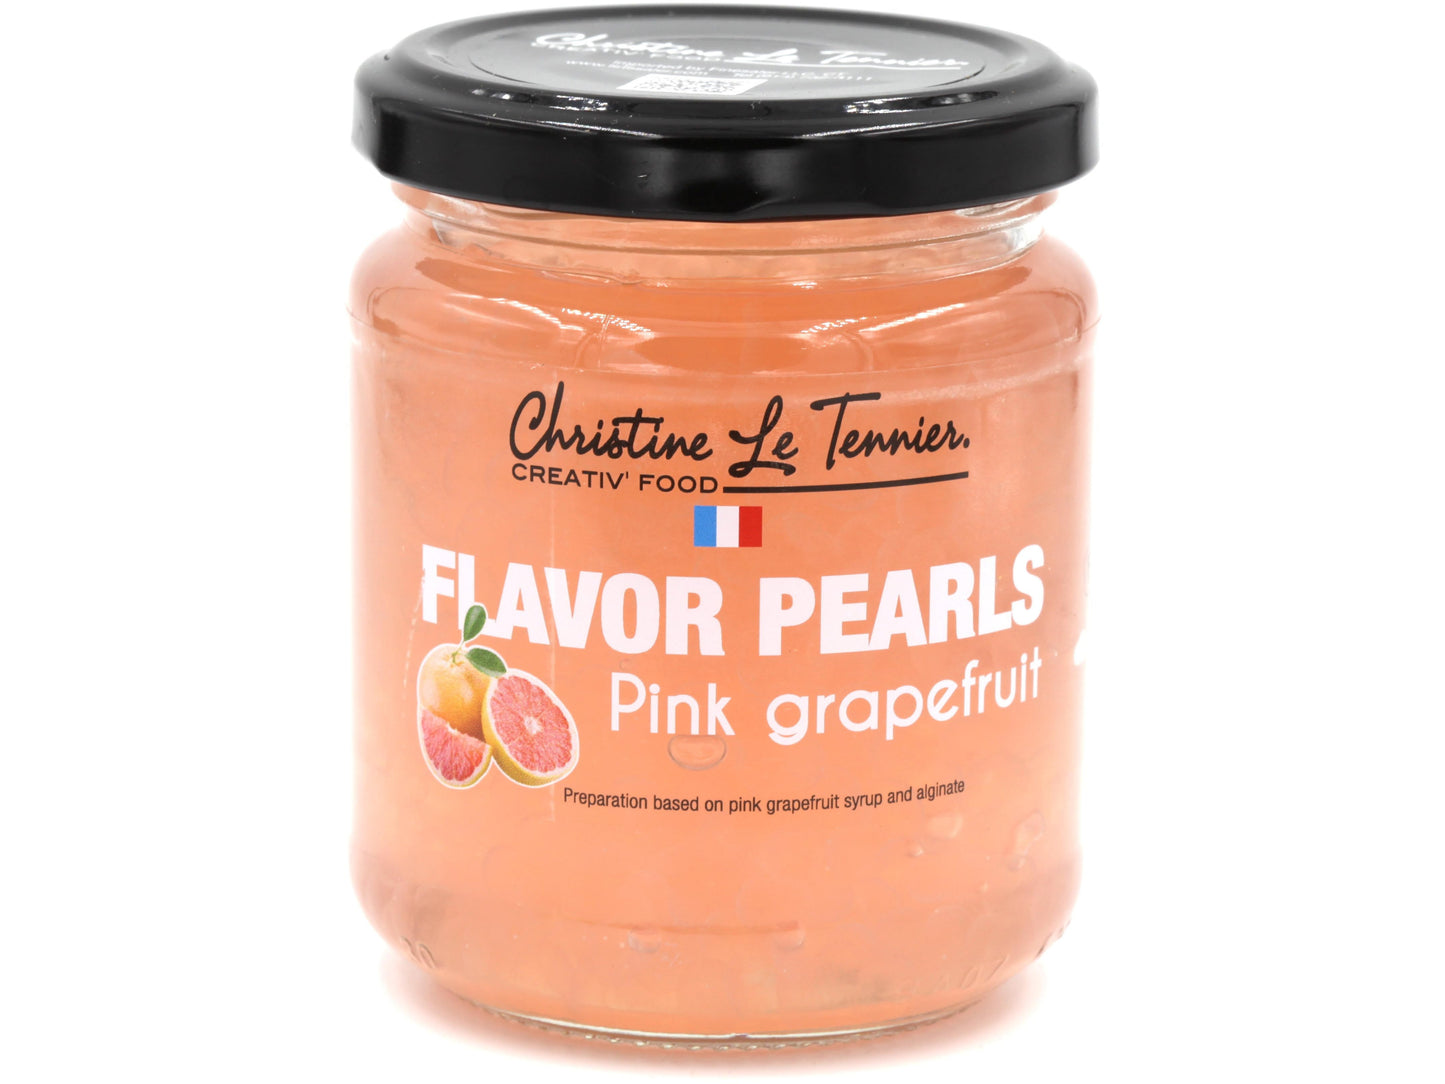 christine le tennier flavored pearls, 7oz jar, france grapefruit